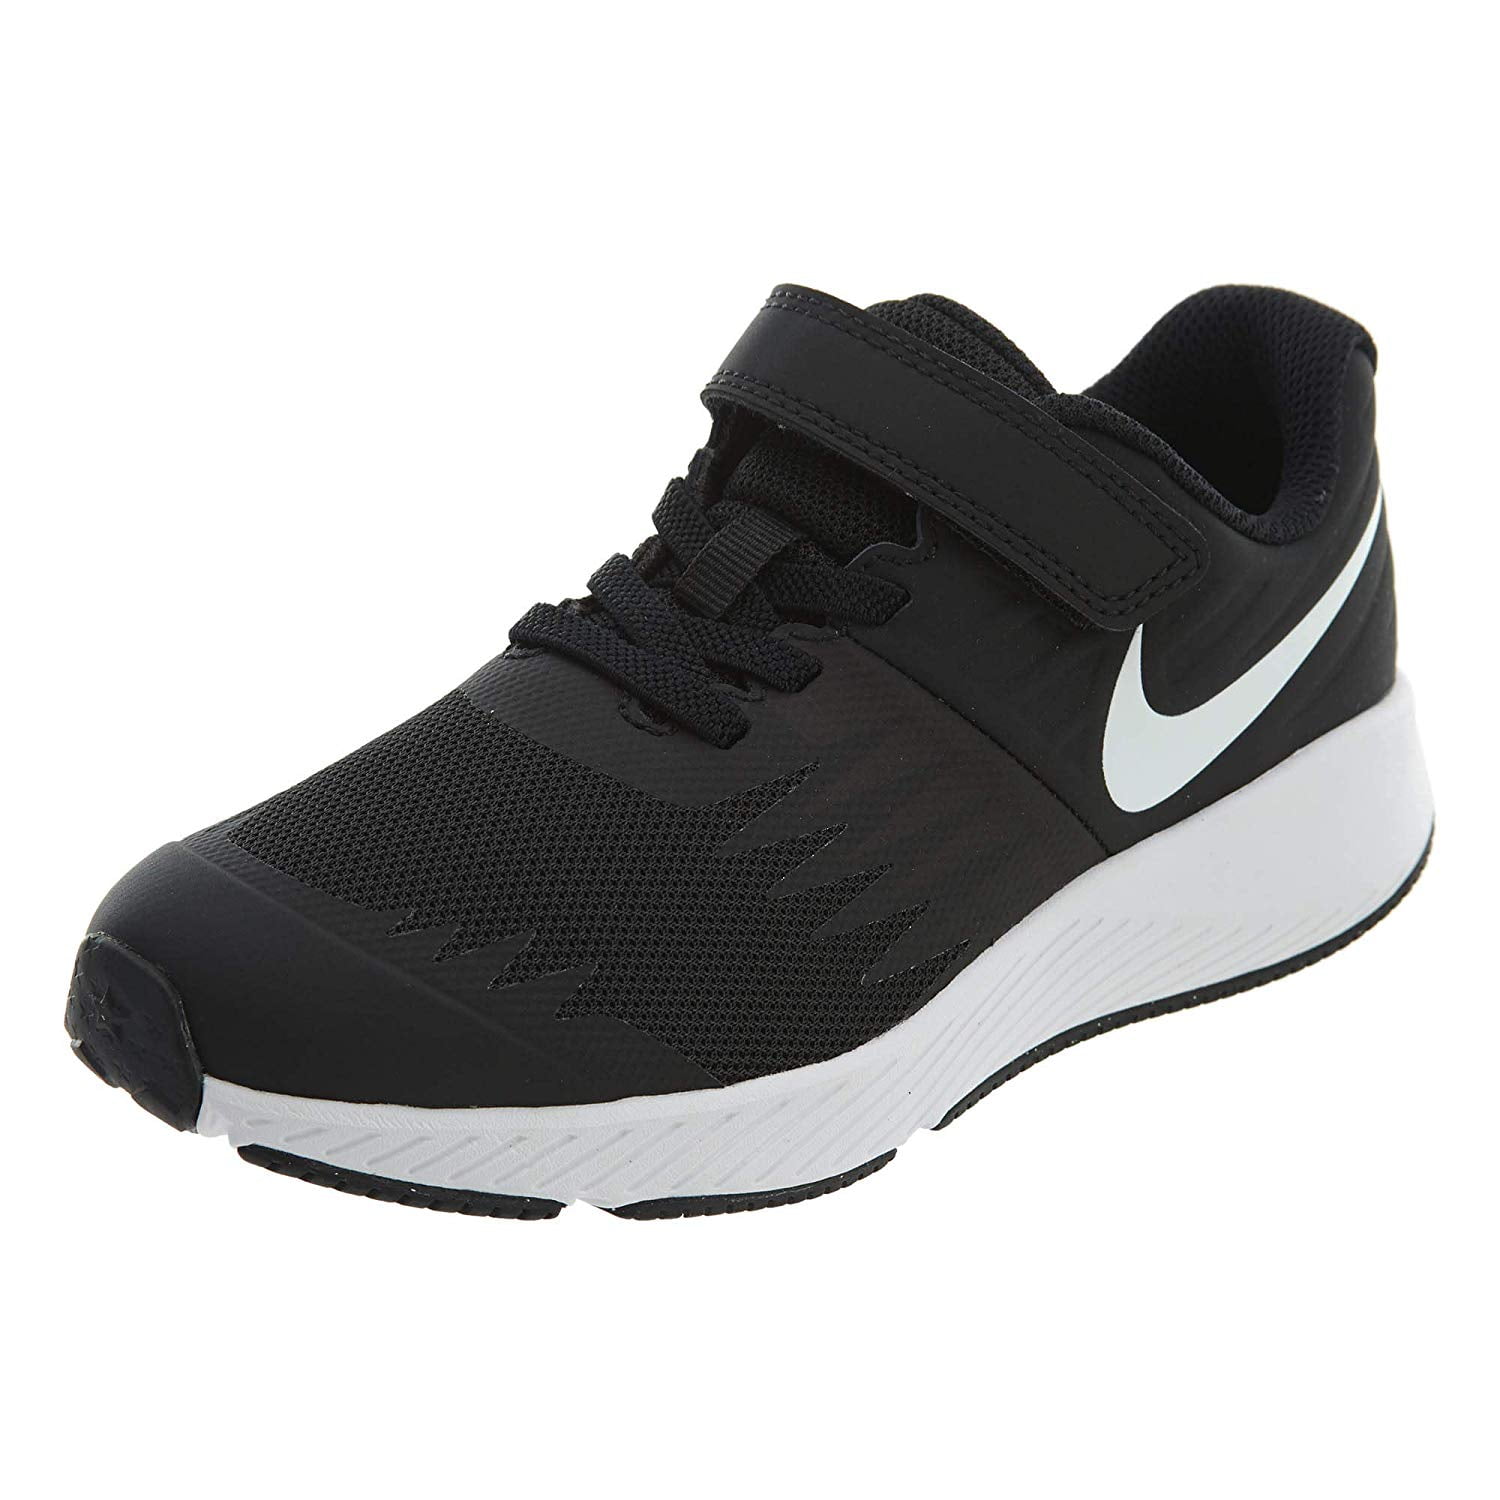 Nike - Nike 921443-001: Big Kids Star Runner (PSV) Black/White Sneakers -  Walmart.com - Walmart.com